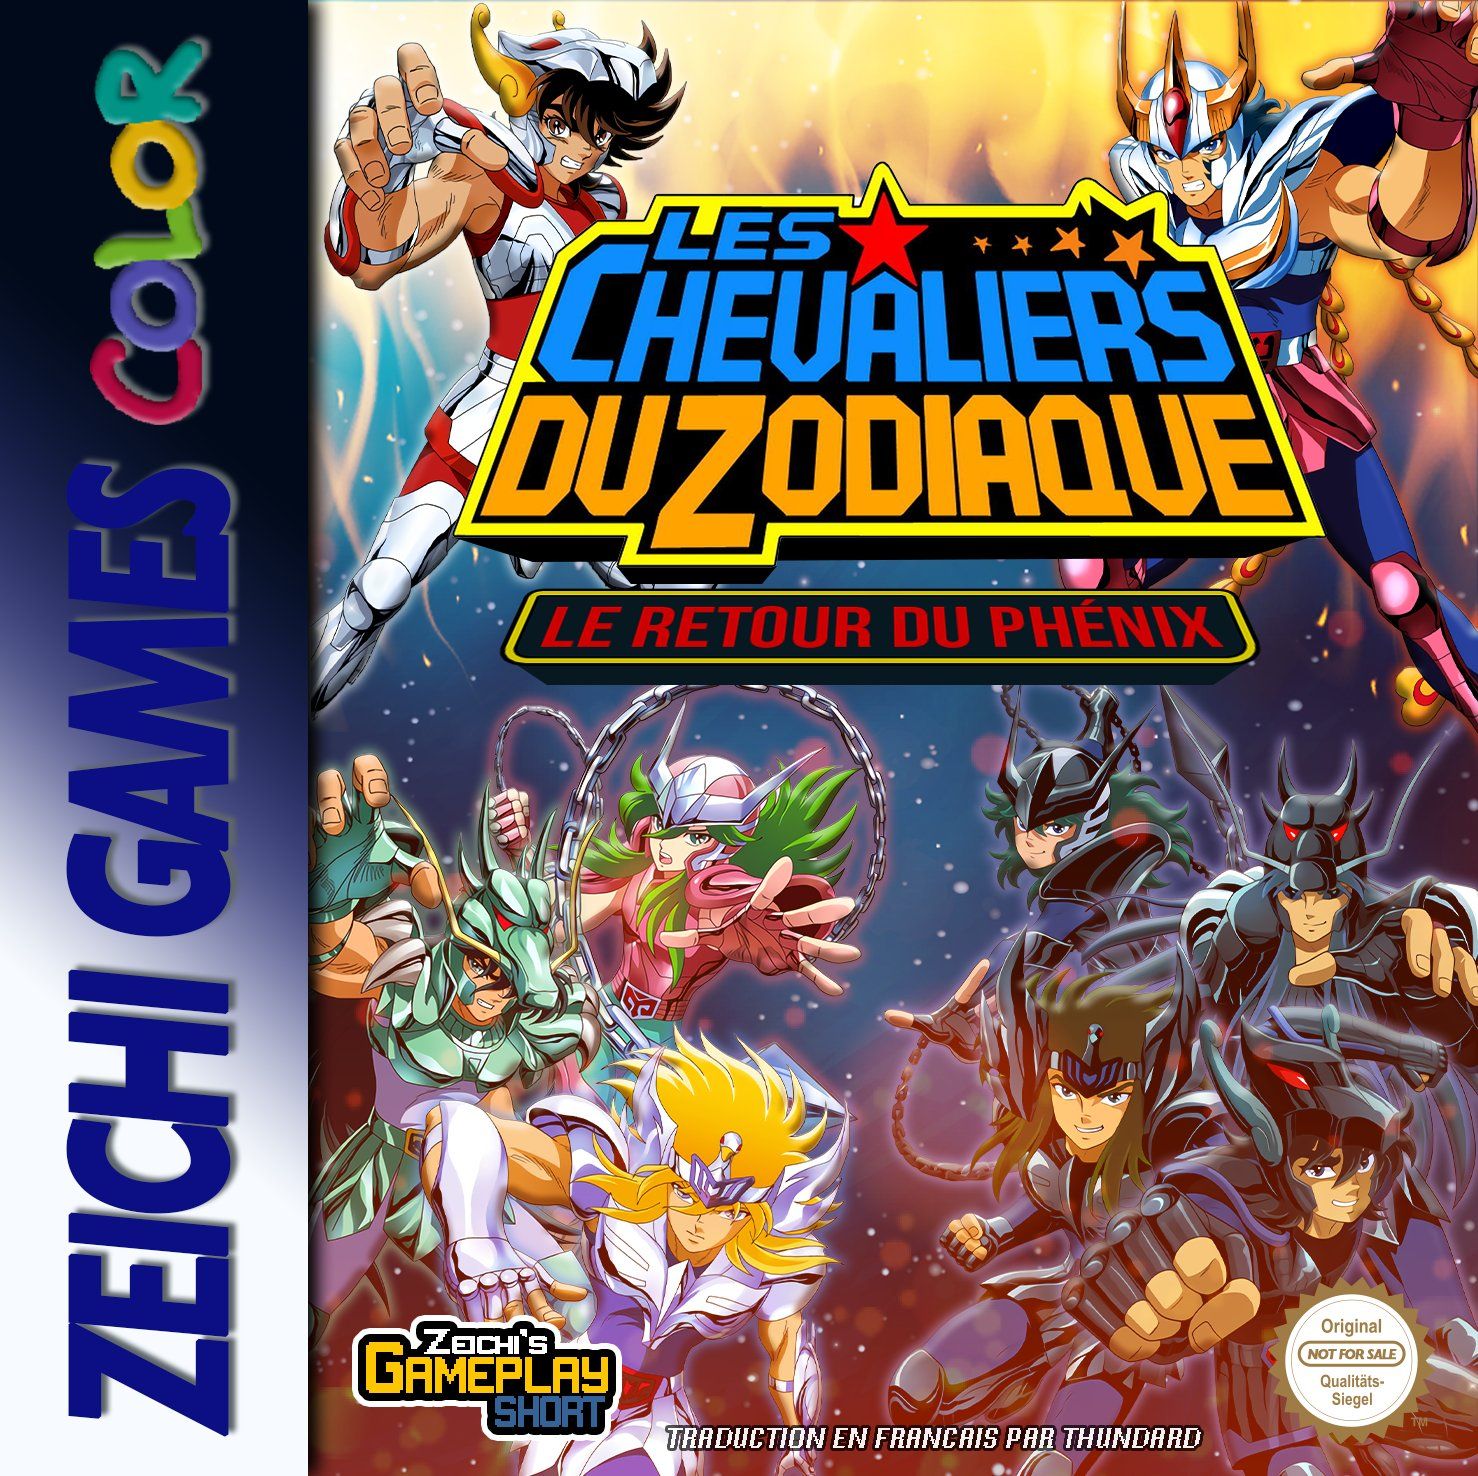 Telecharger Jeu Chevaliers Zodiaque Game Boy Color